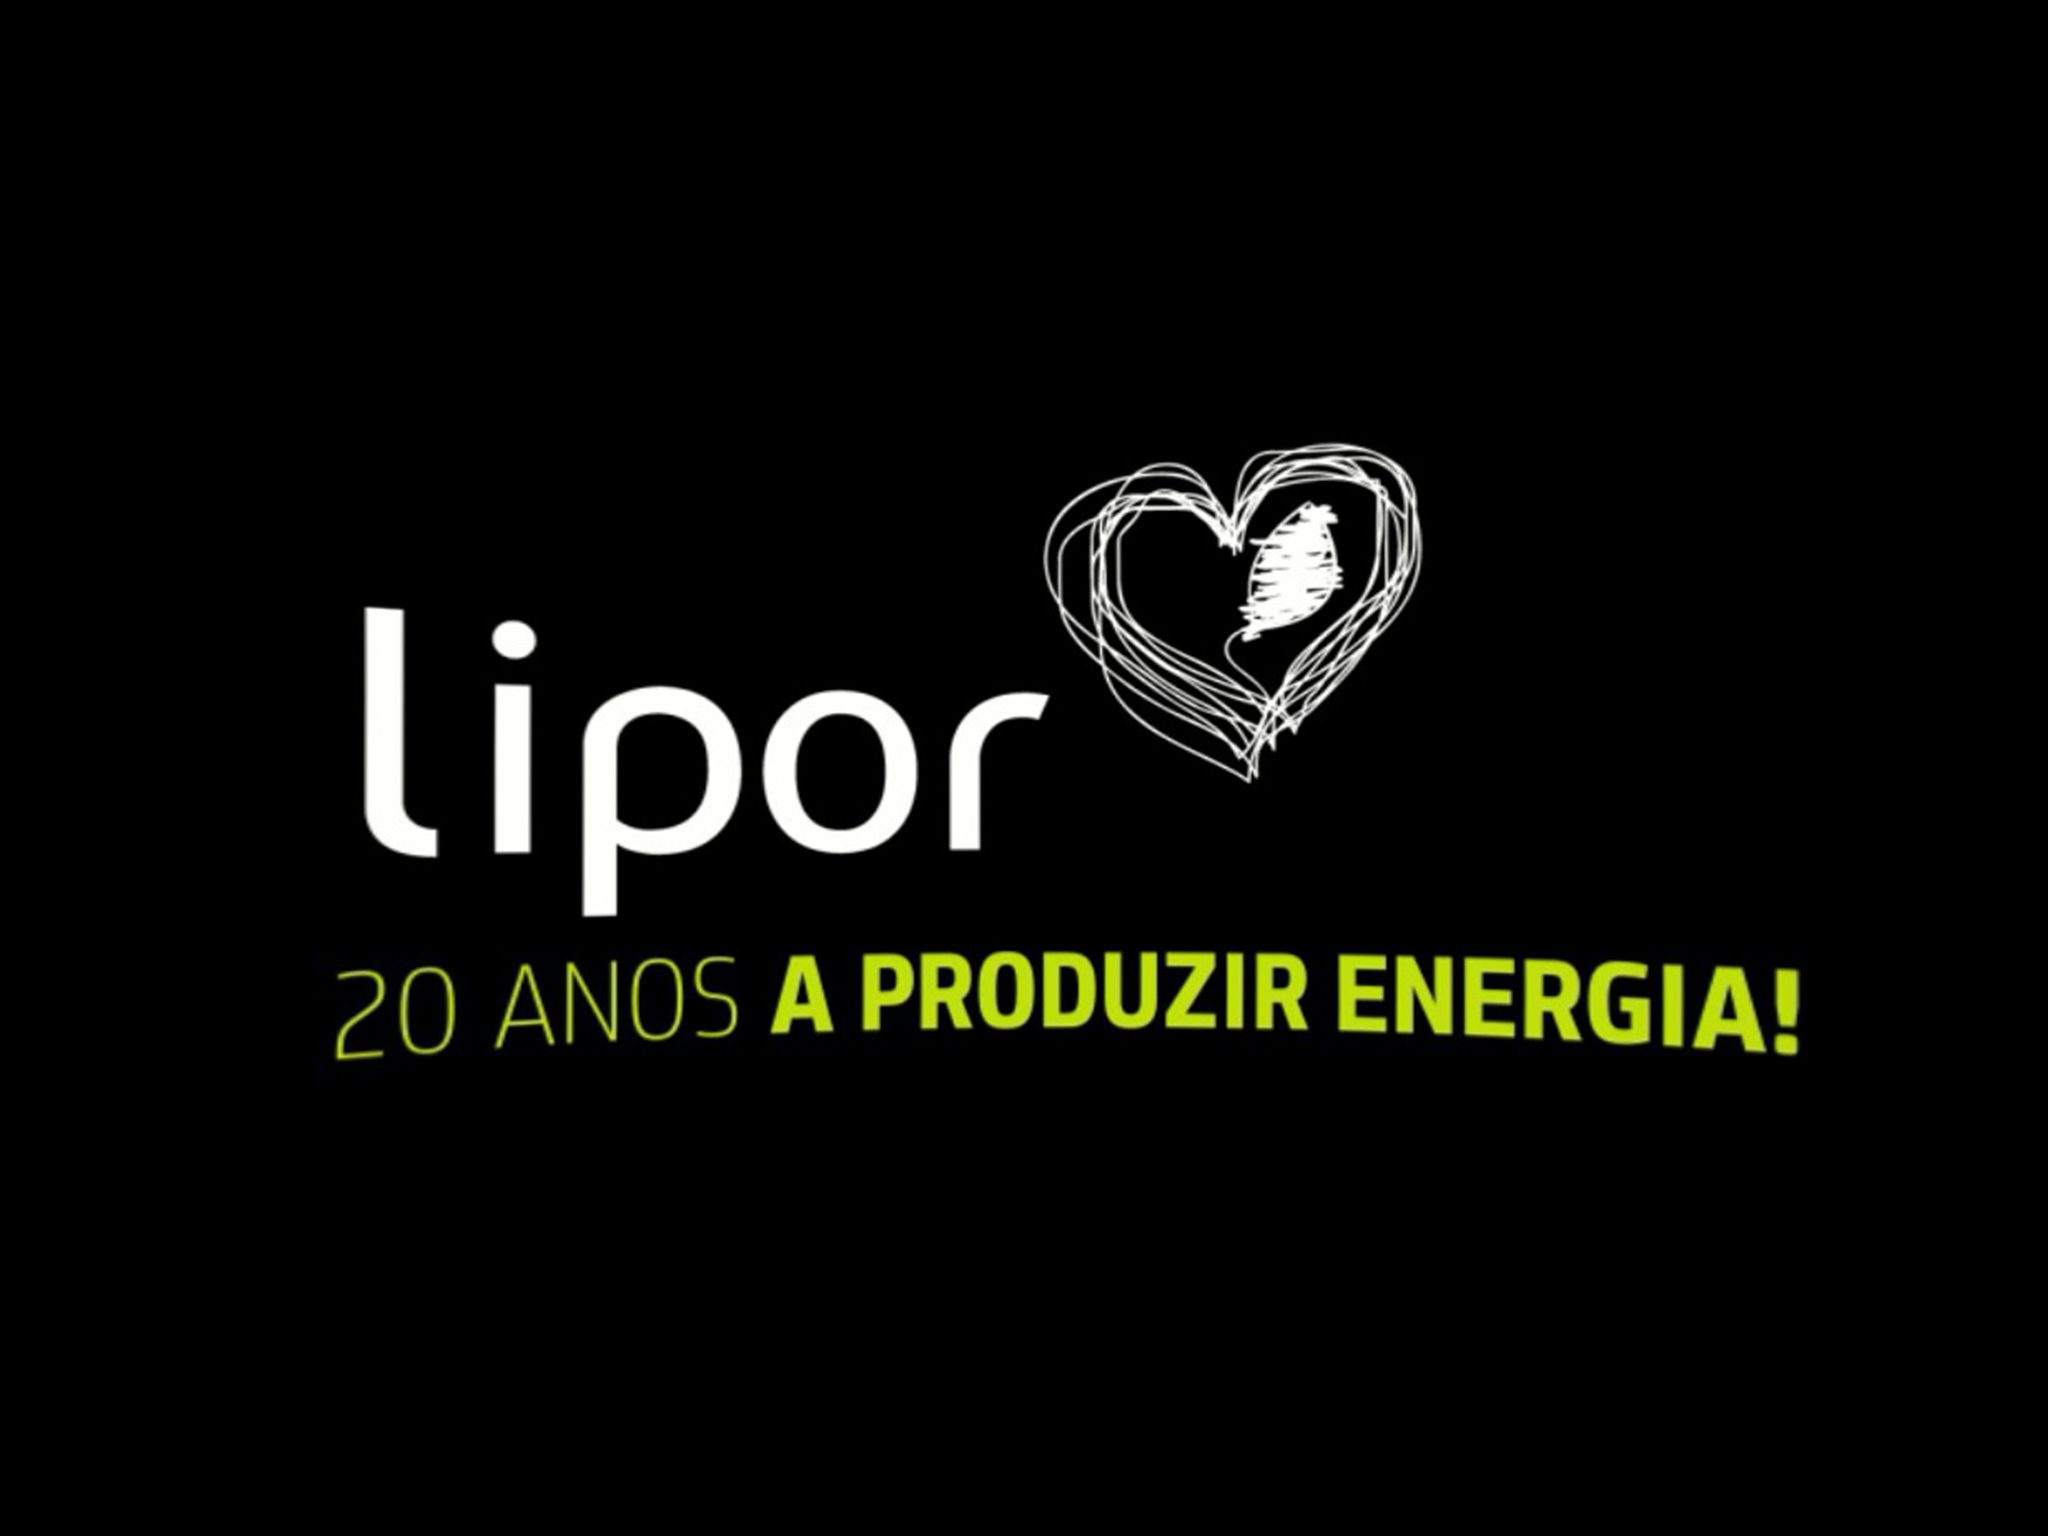 Logo Lipor - "20 Anos a Produzir Energia"